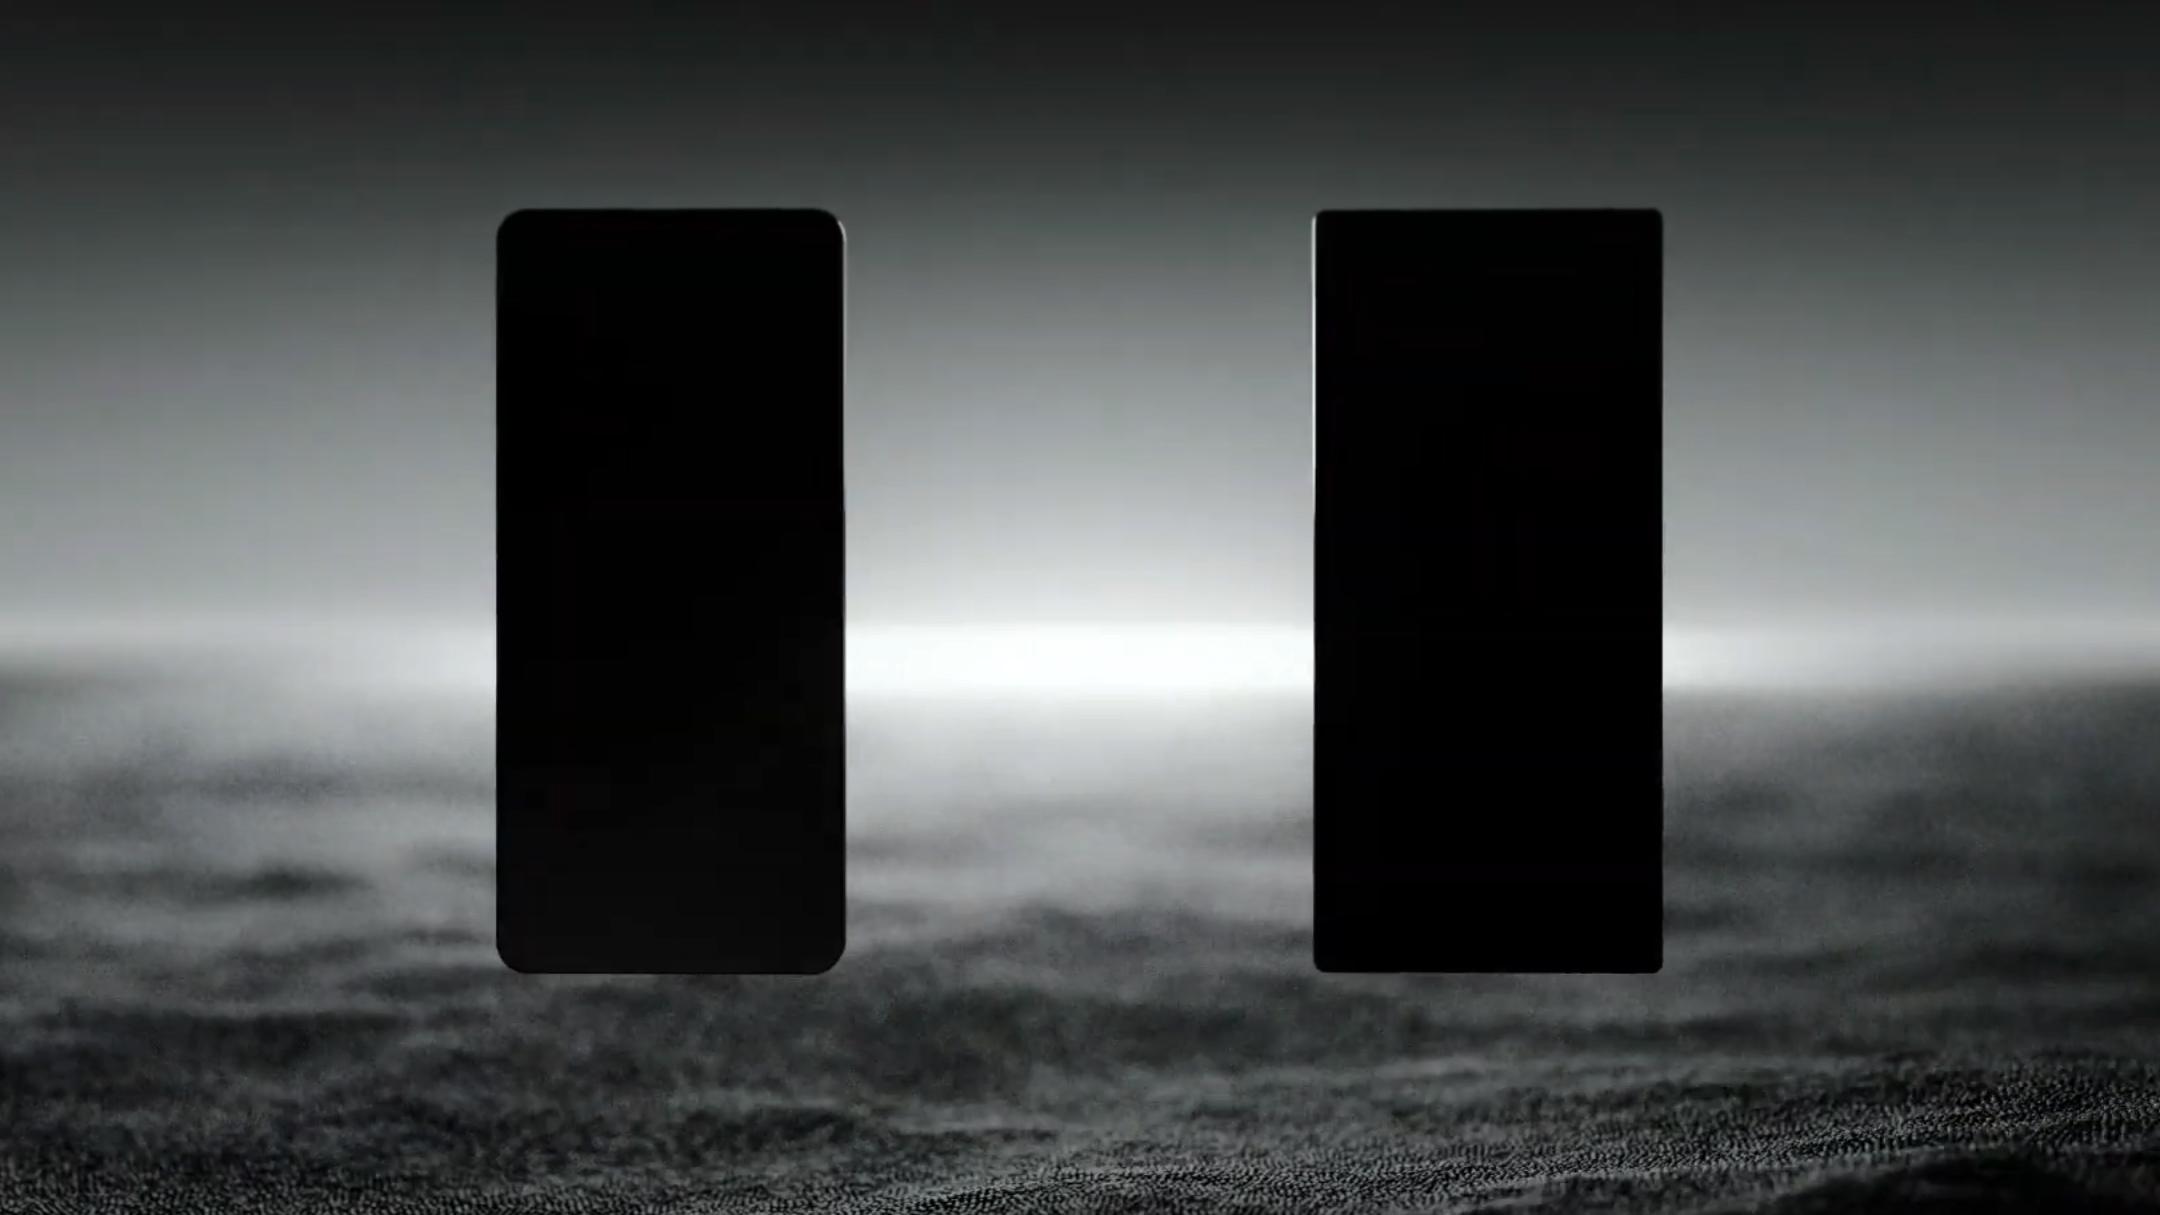 I en kort video Samsung har lagt ut, ser vi to mobiler som smelter sammen til én.